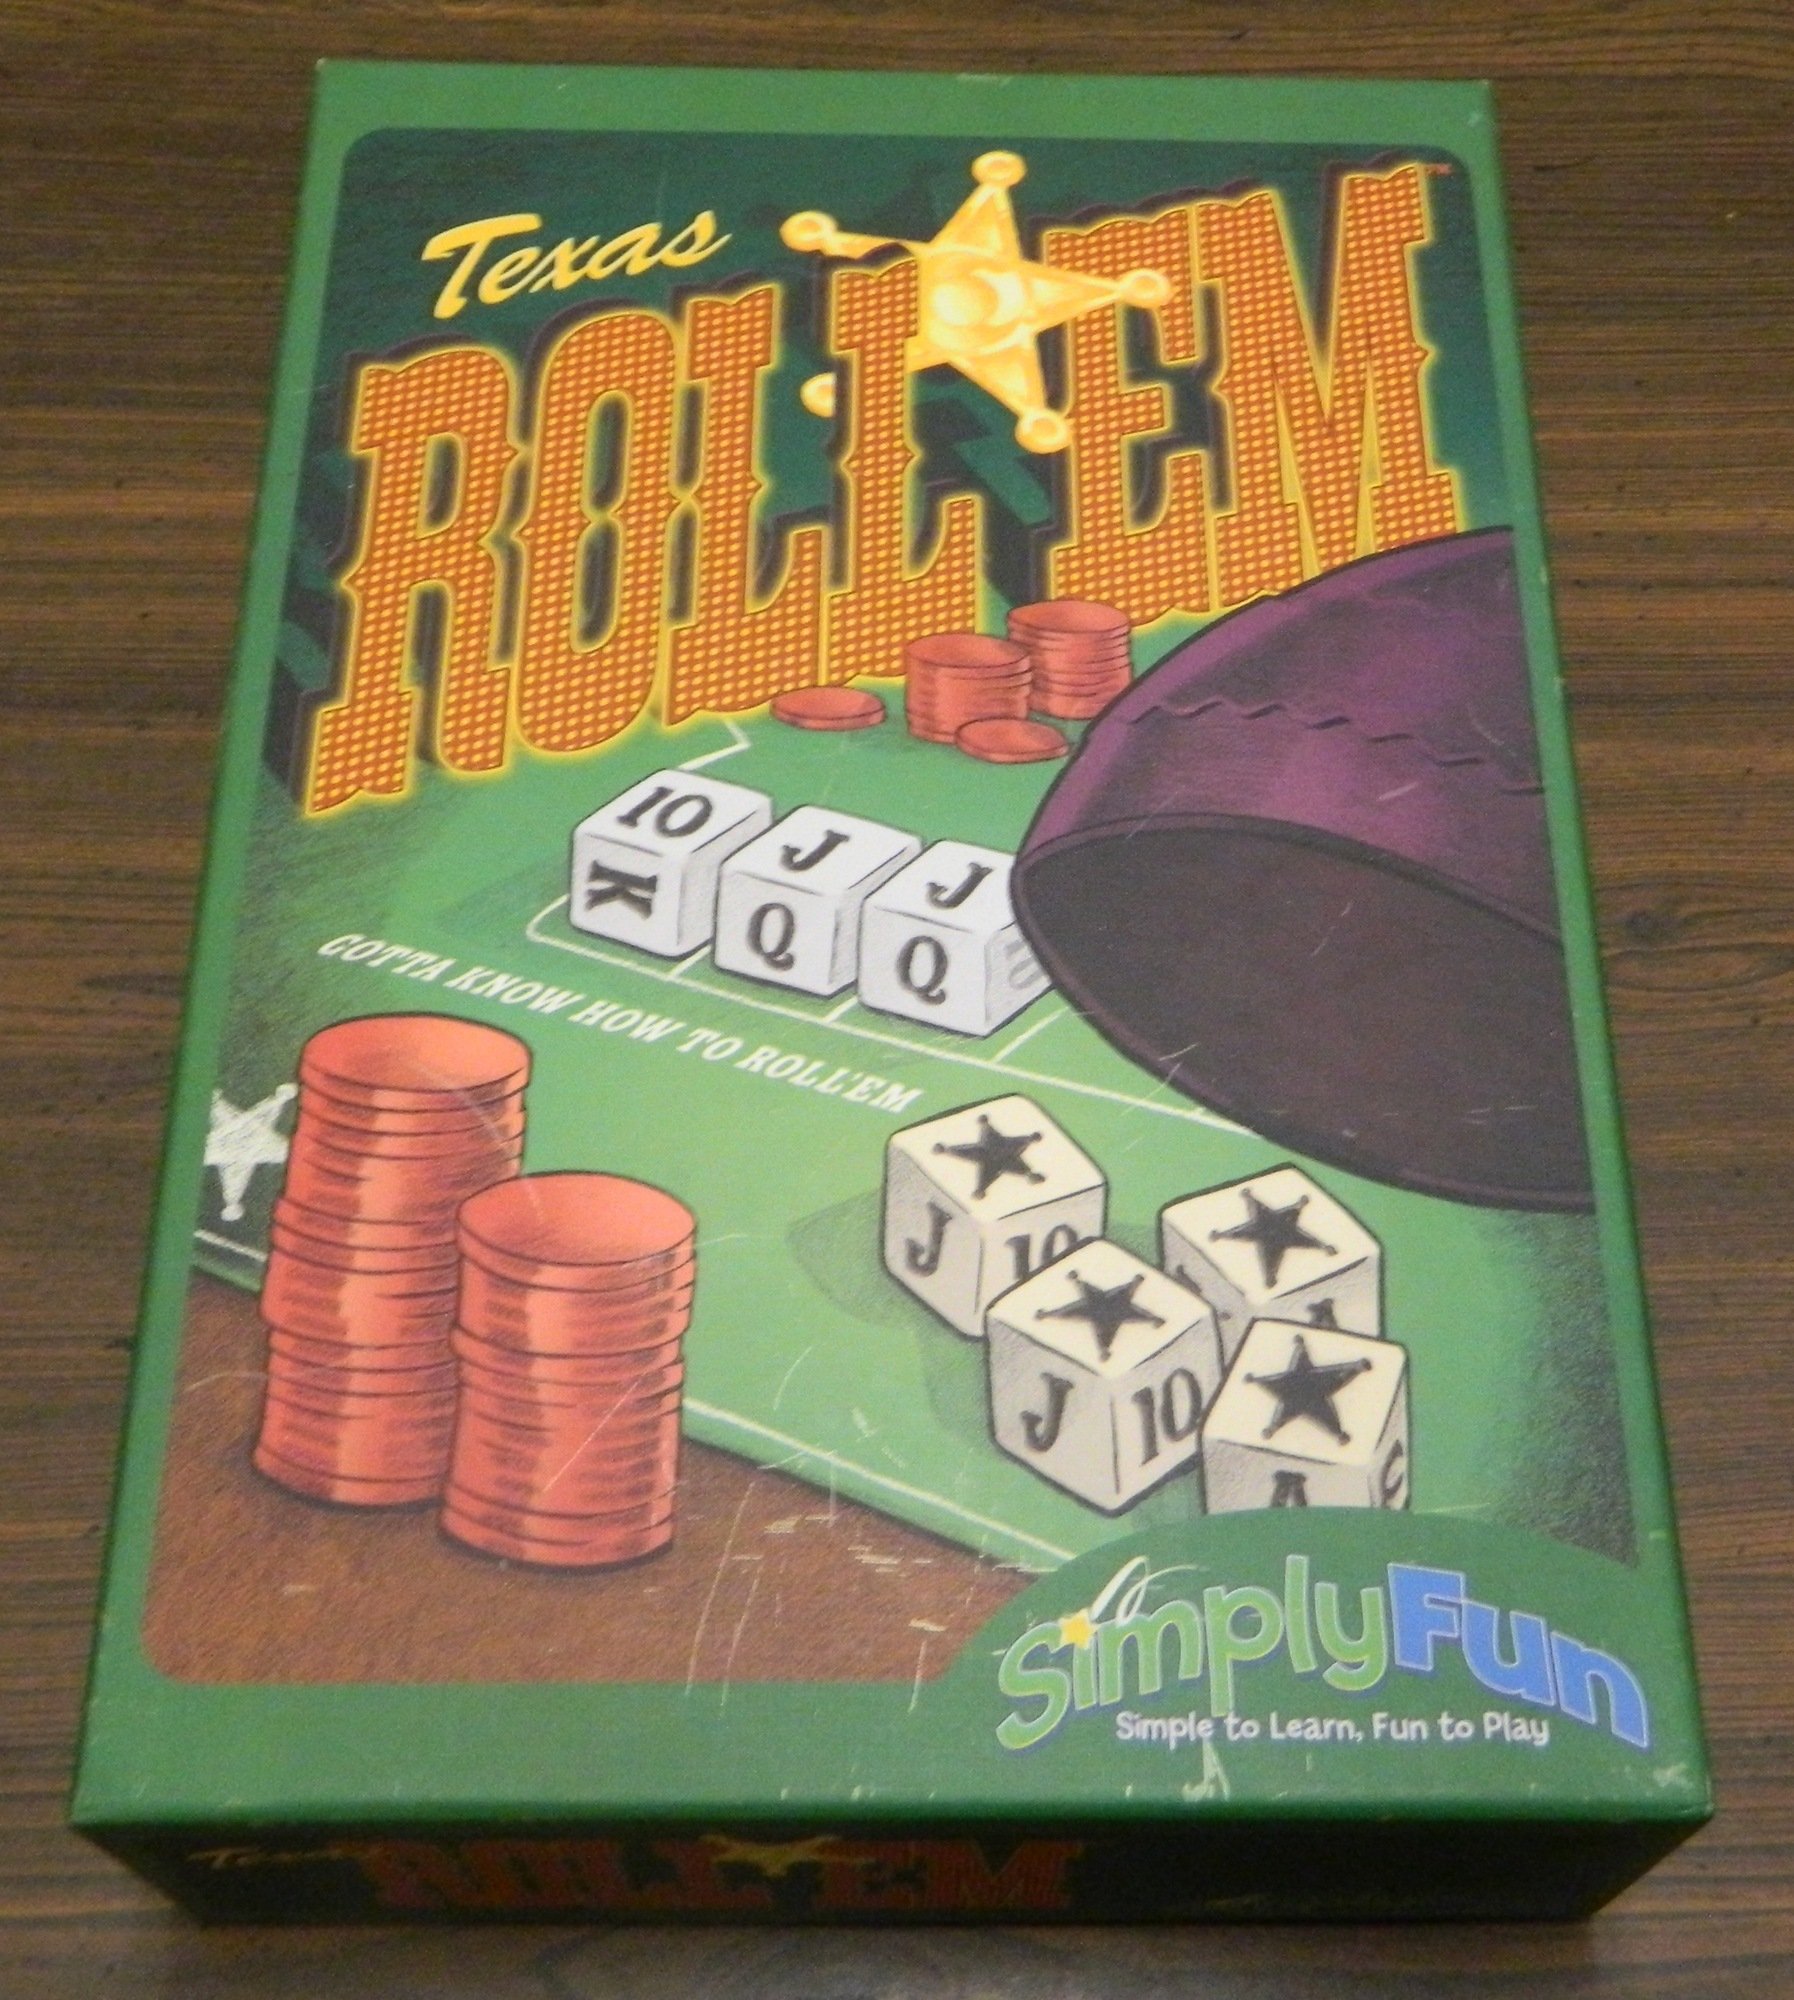 Texas Roll'Em Box